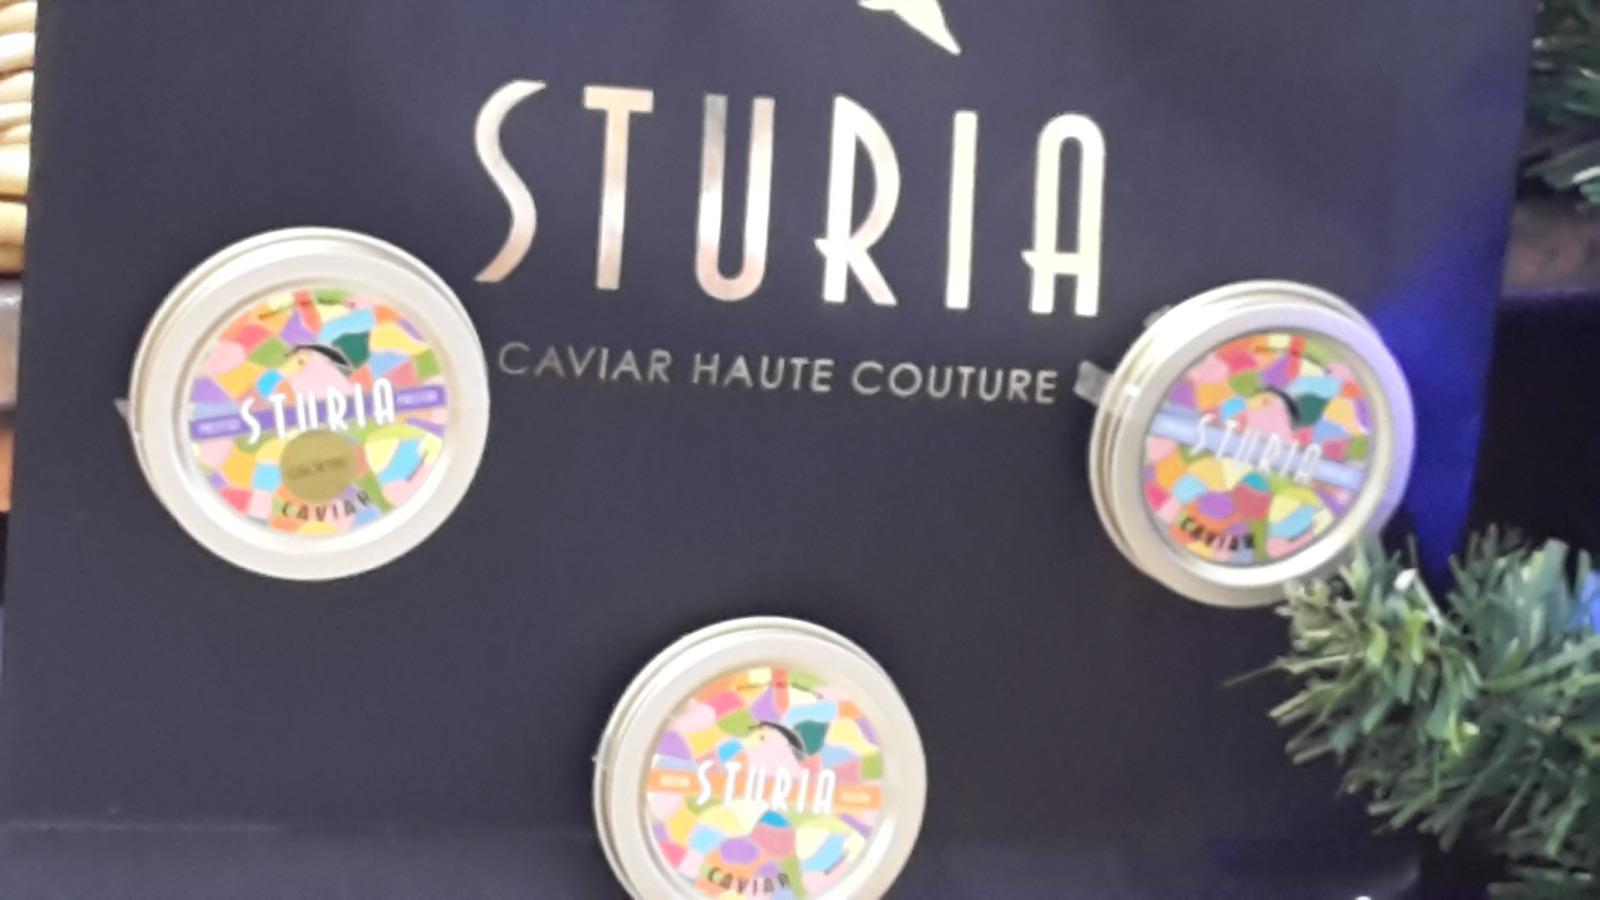 caviar sturia aquitaine